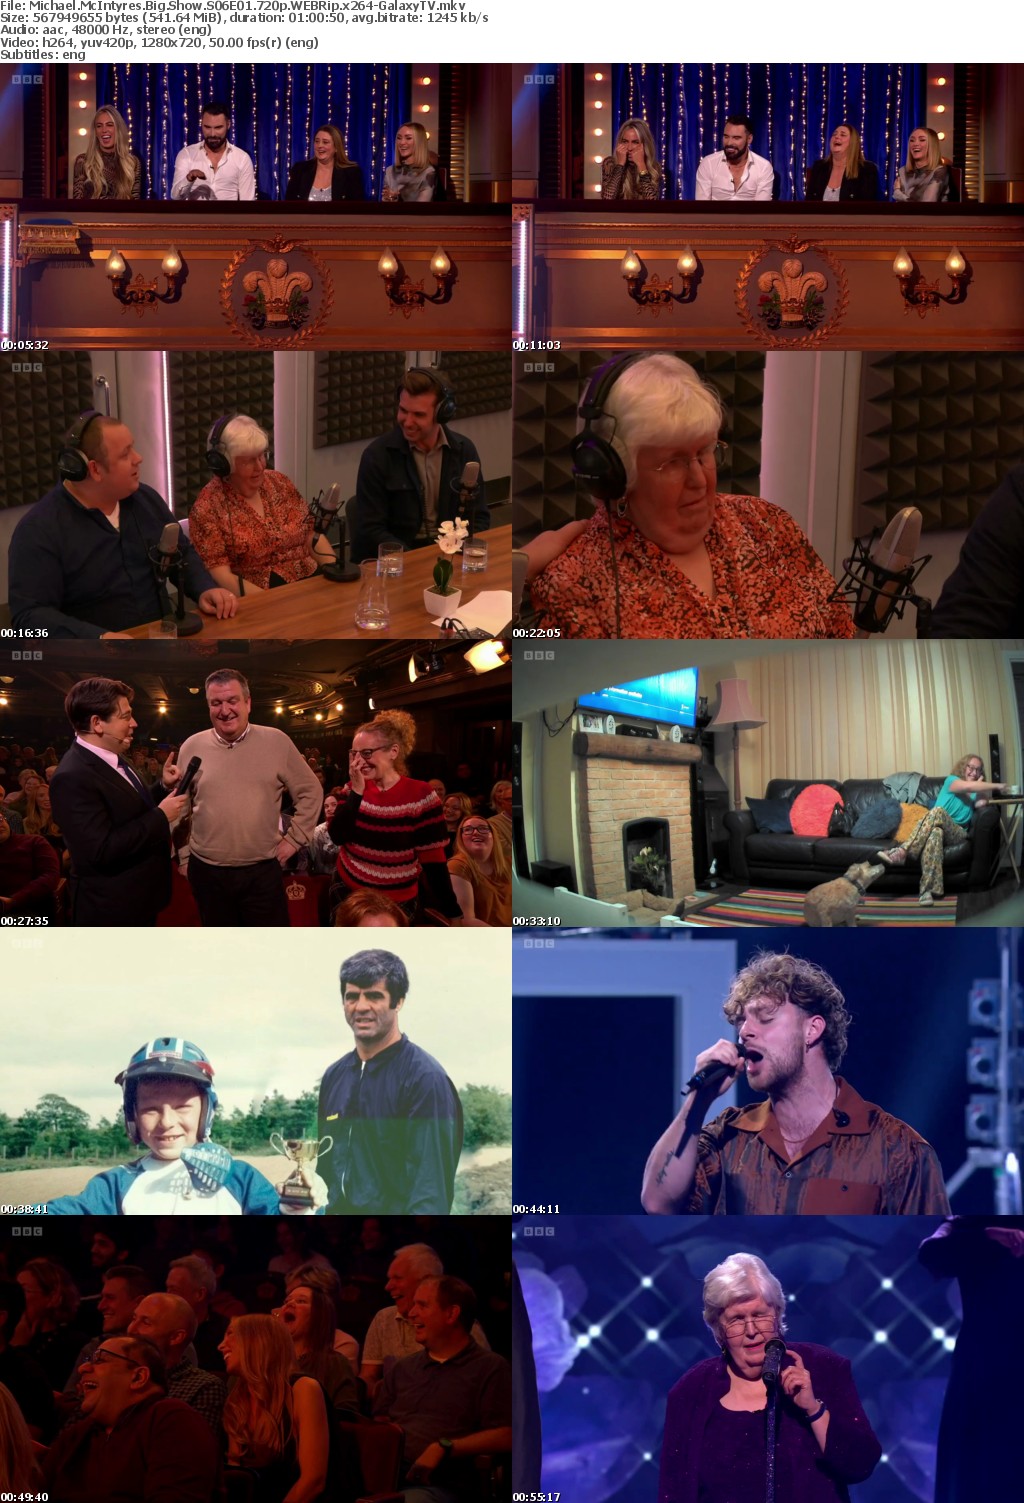 Michael McIntyres Big Show S06 COMPLETE 720p WEBRip x264-GalaxyTV